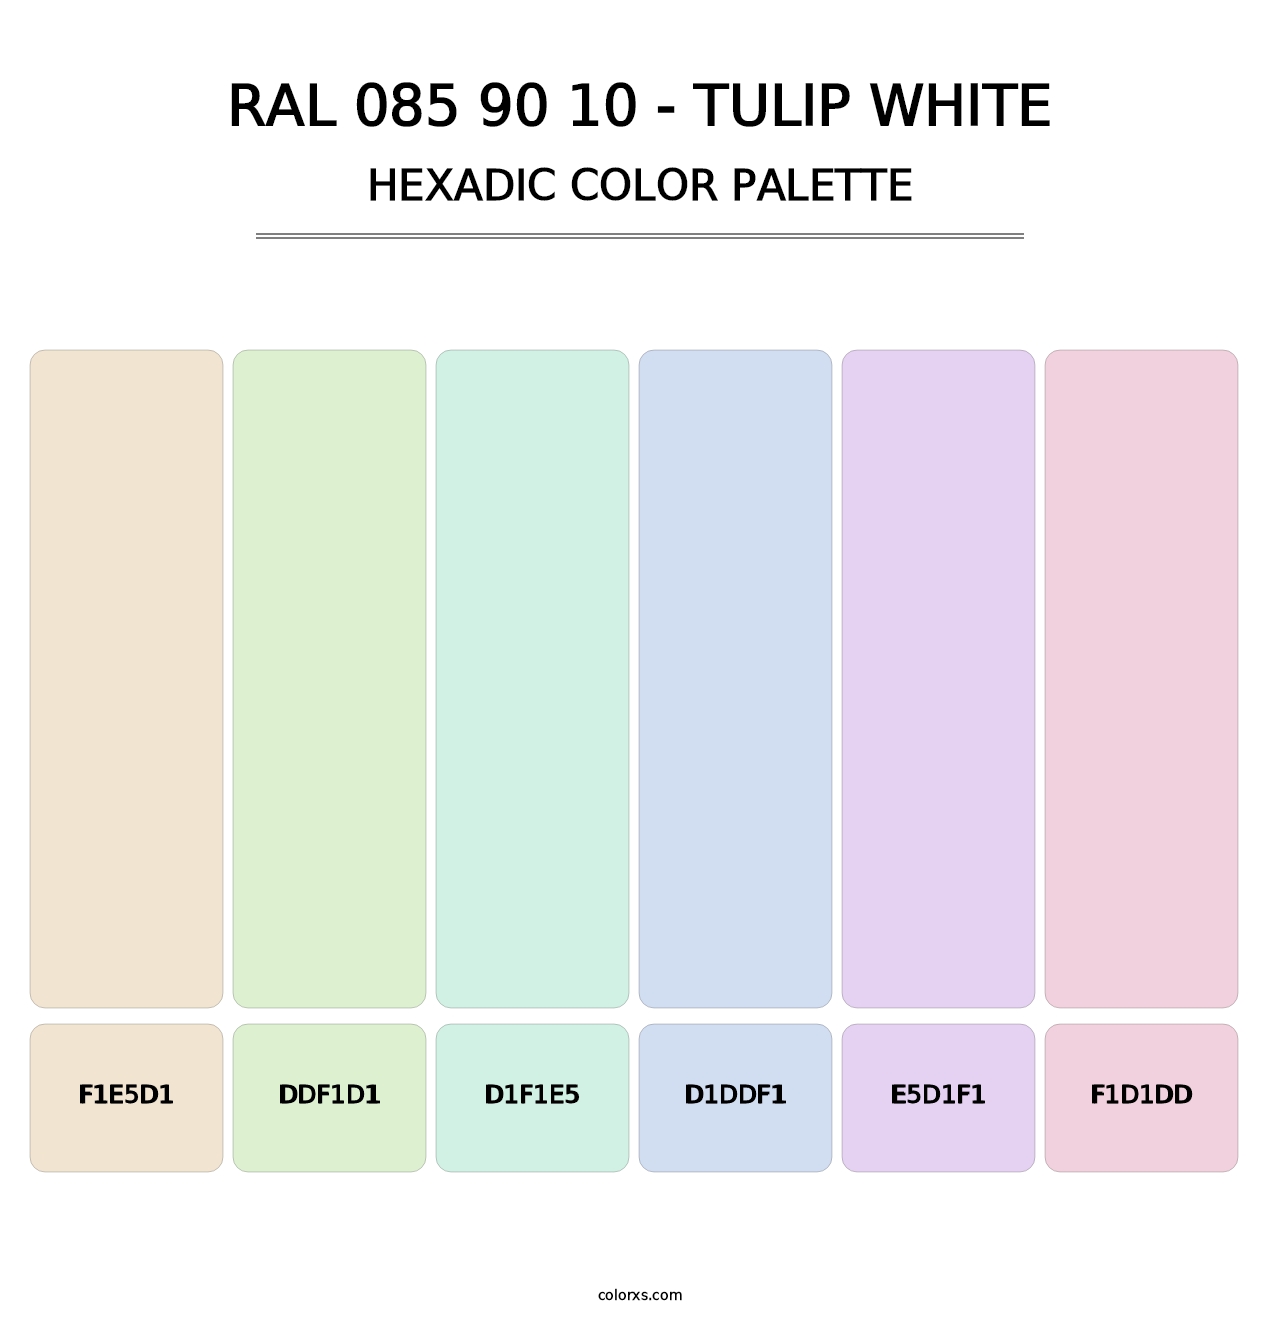 RAL 085 90 10 - Tulip White - Hexadic Color Palette